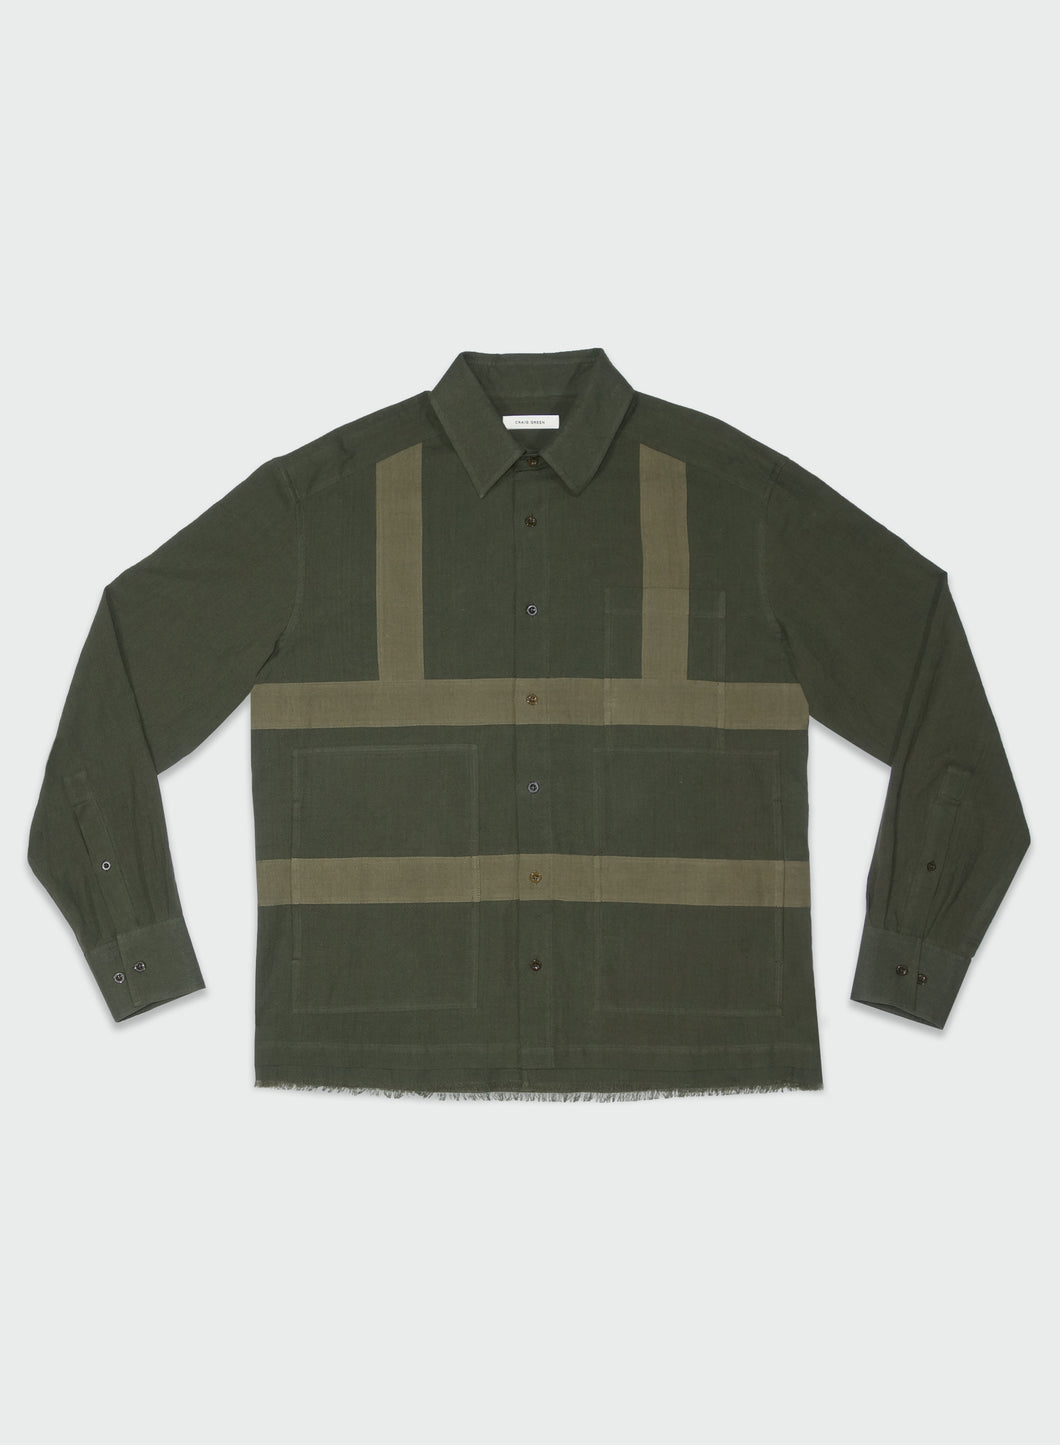 Craig Green Harness Shirt (Olive / Light Olive)